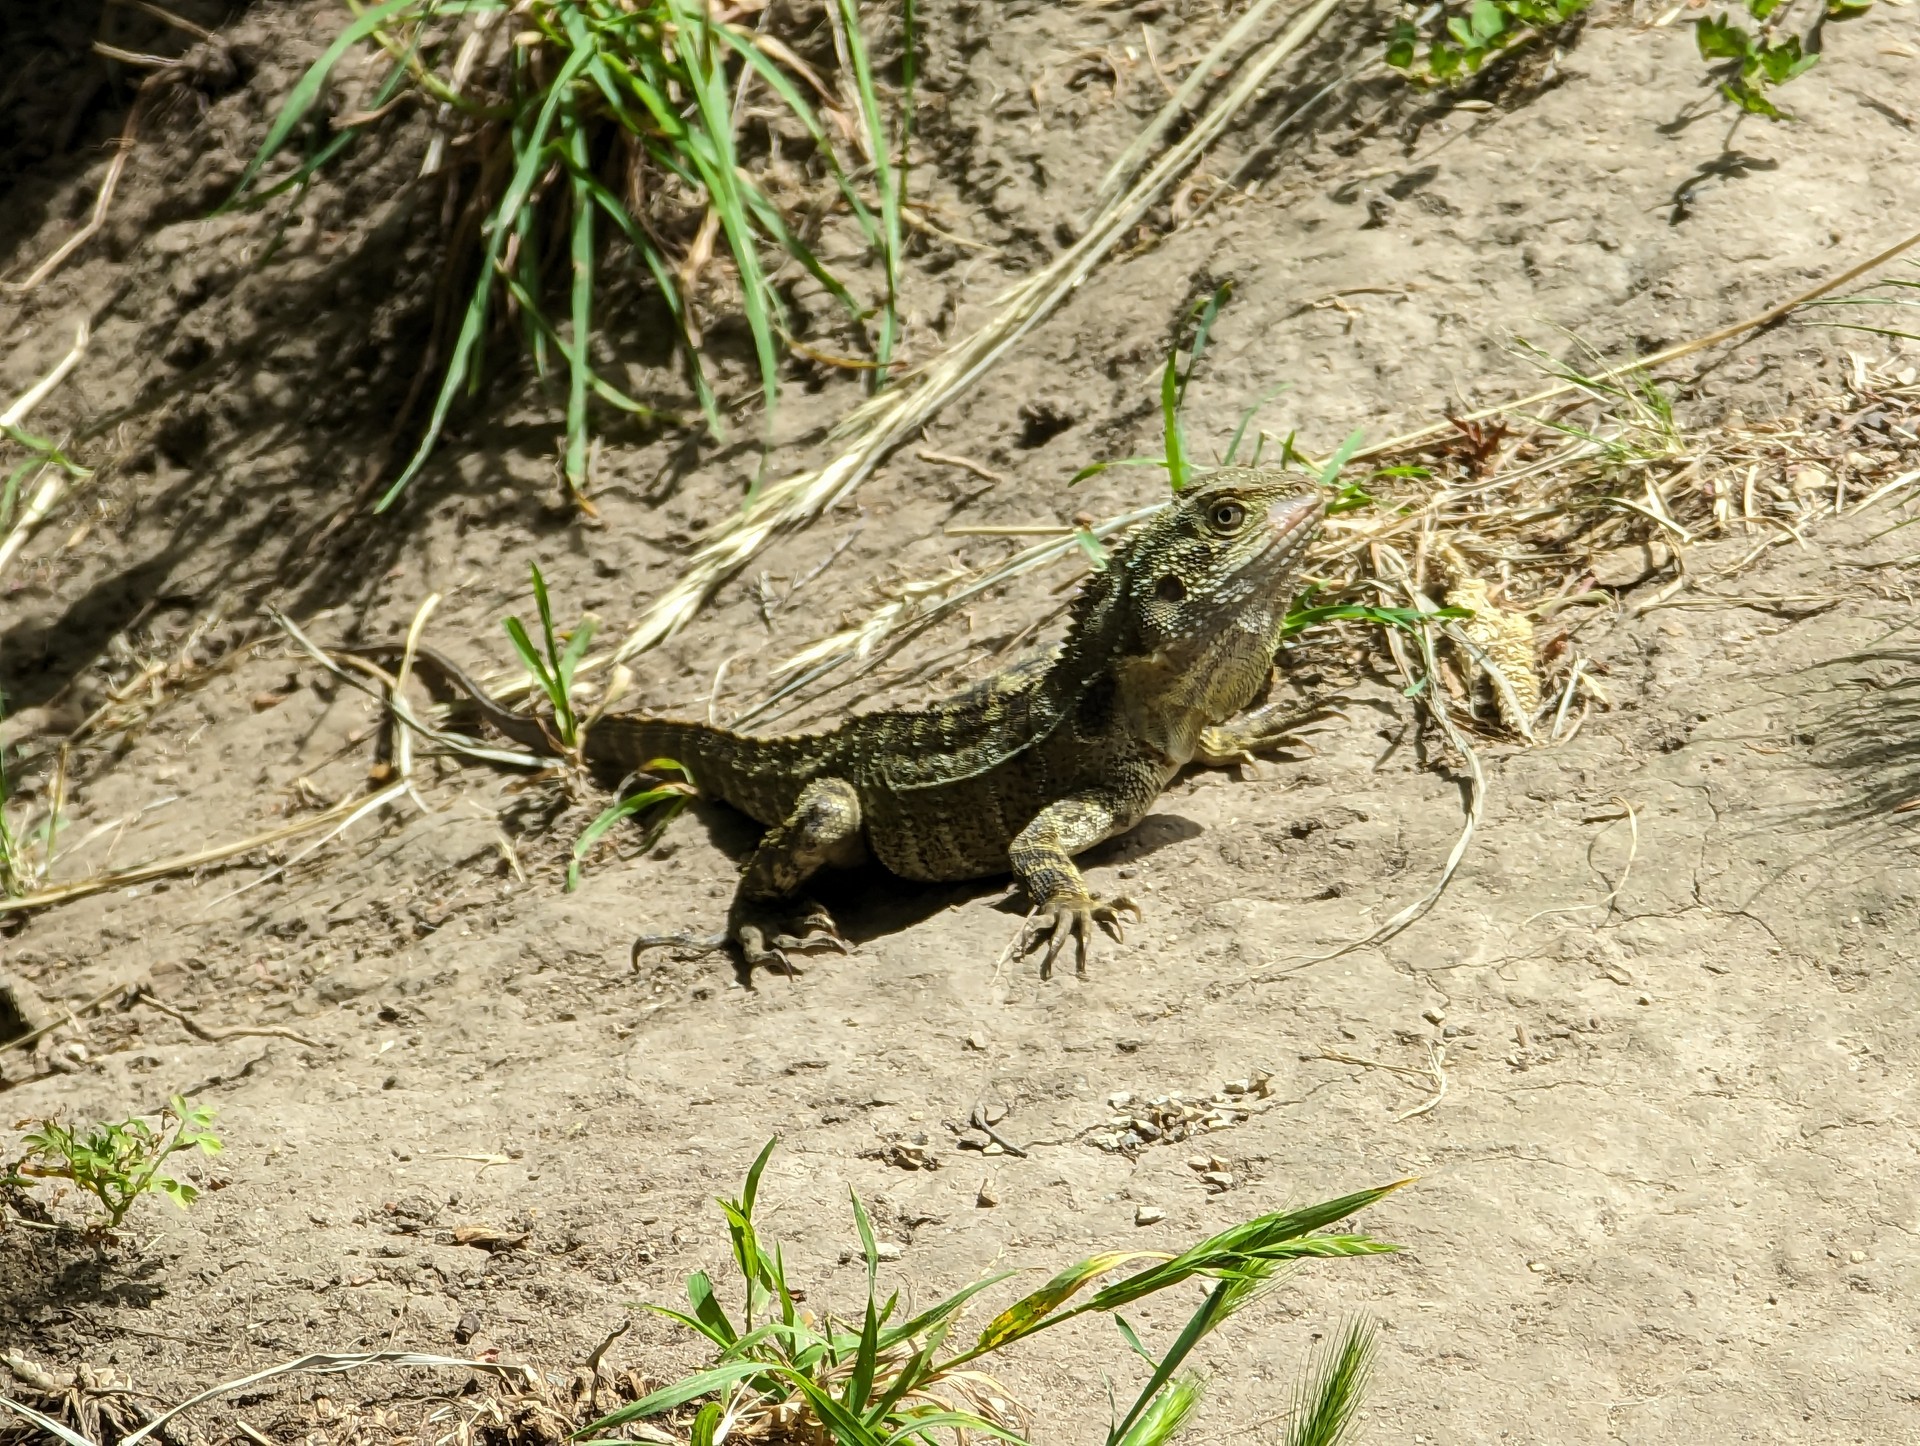 Lizard friend enjoying the nice sun on a clear patch of dirt